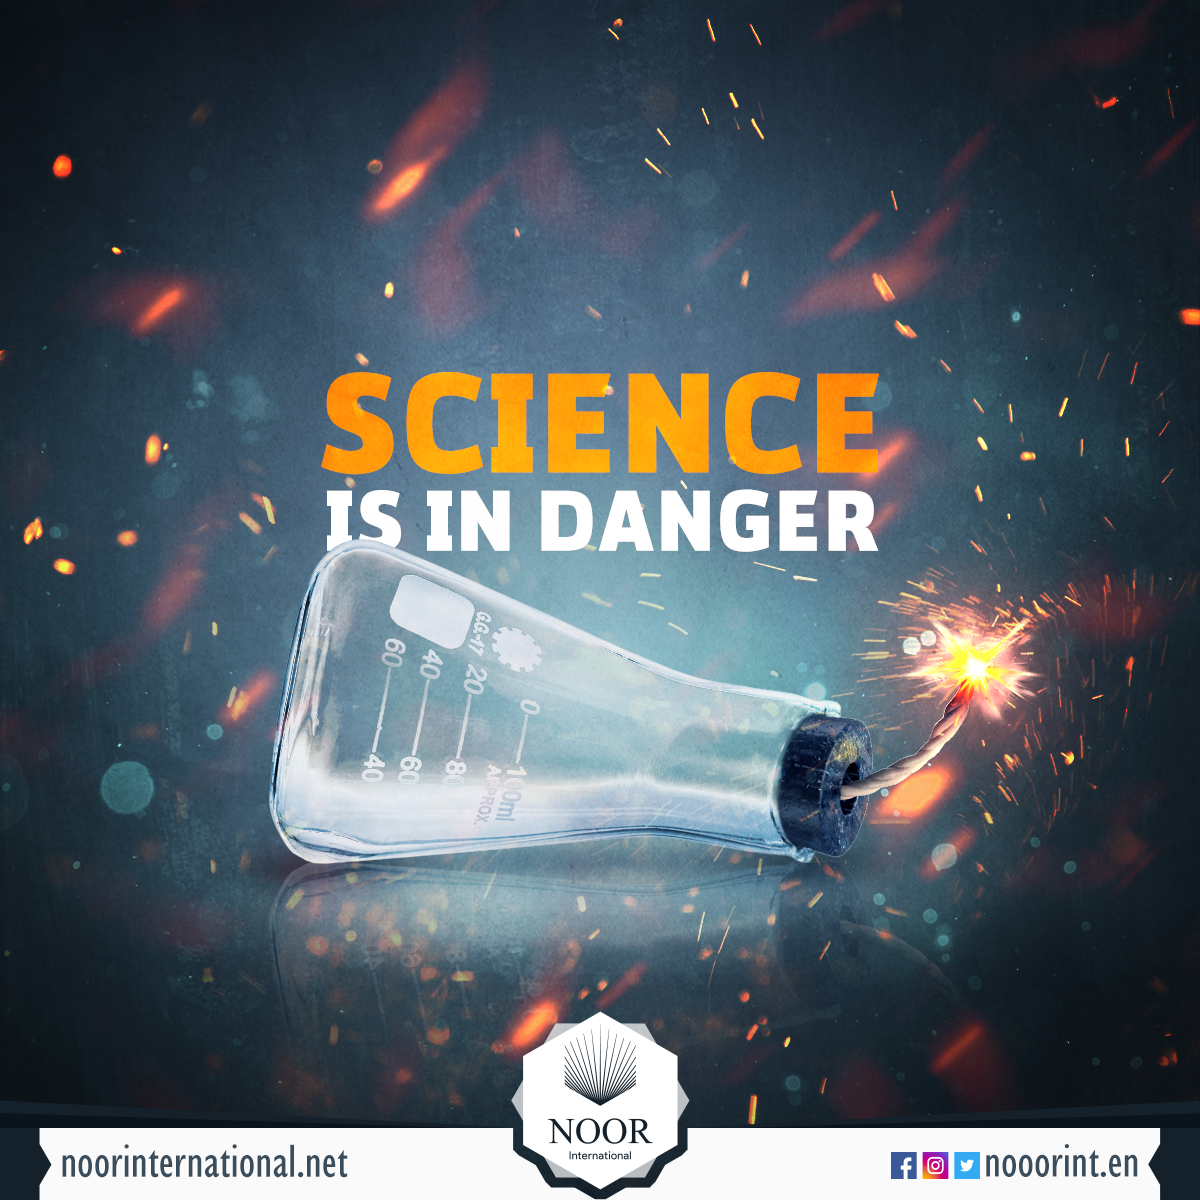 Science is in danger